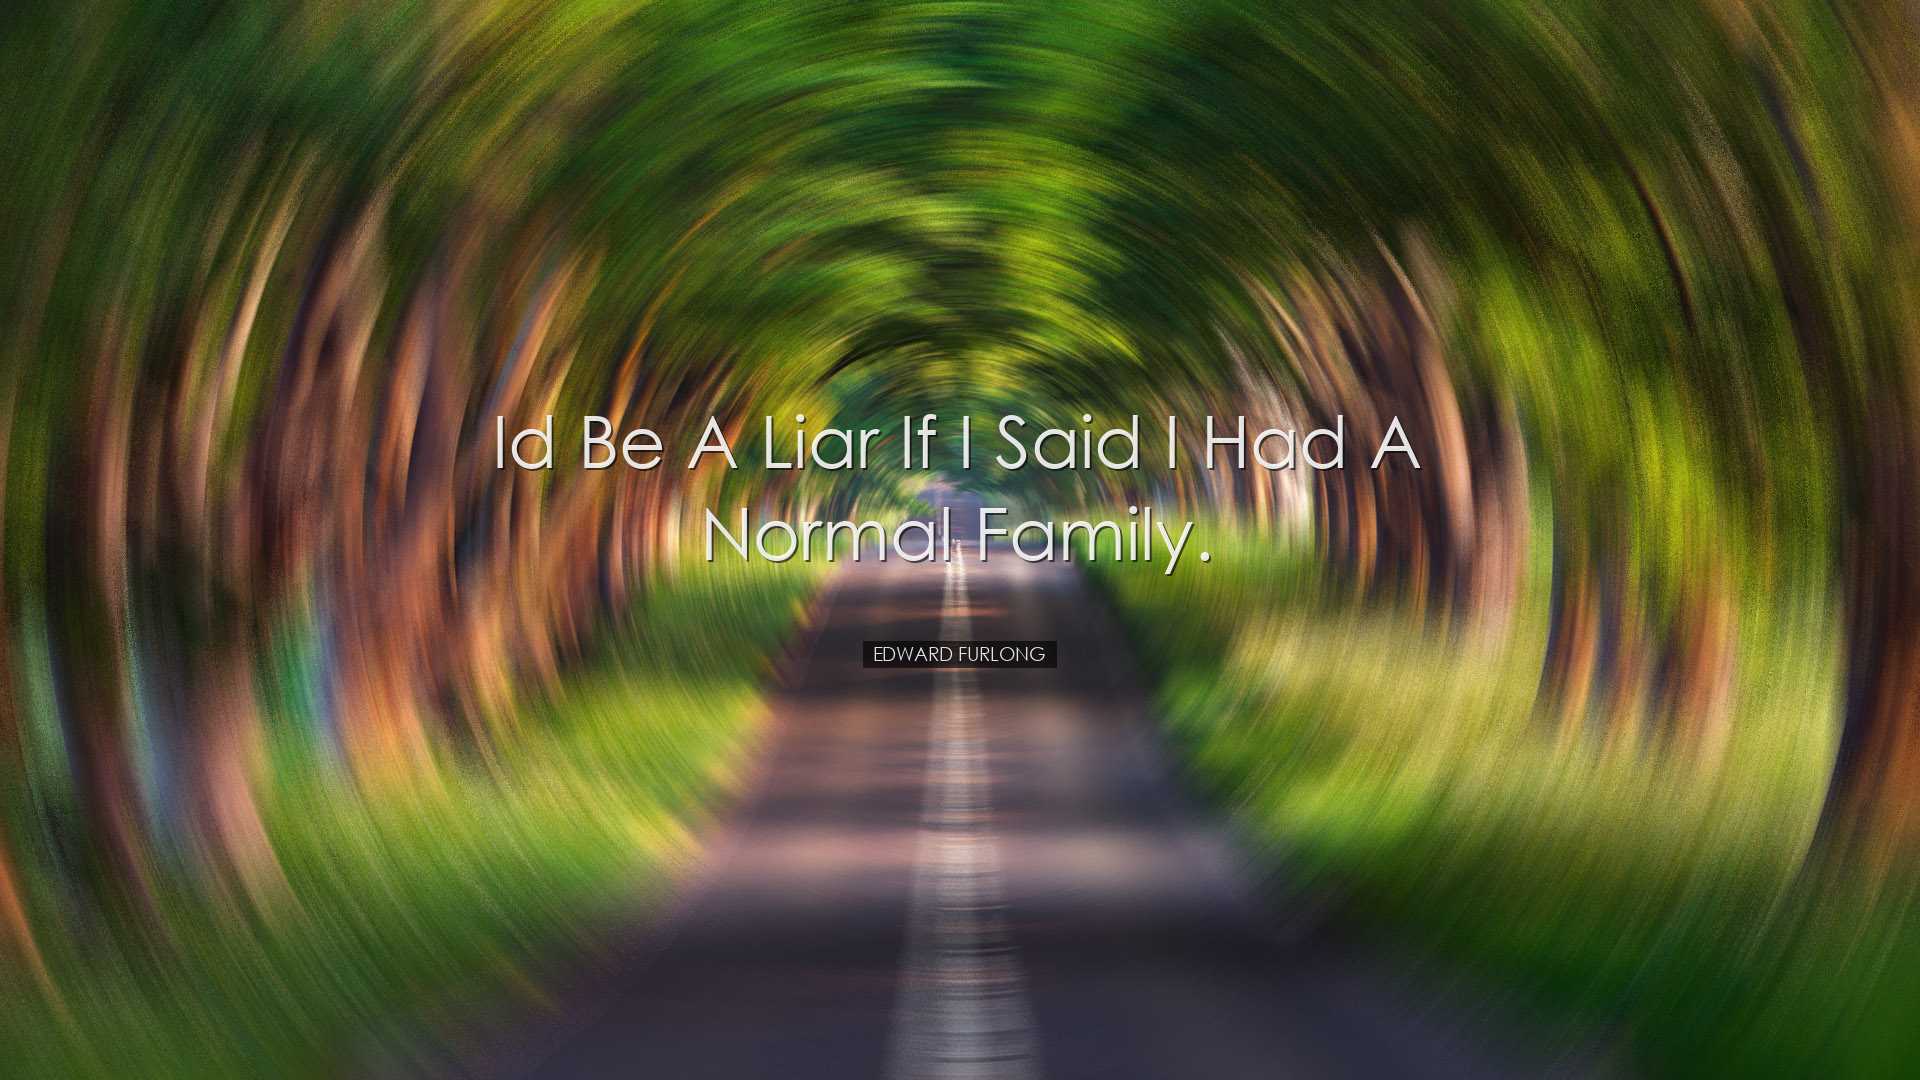 Id be a liar if I said I had a normal family. - Edward Furlong